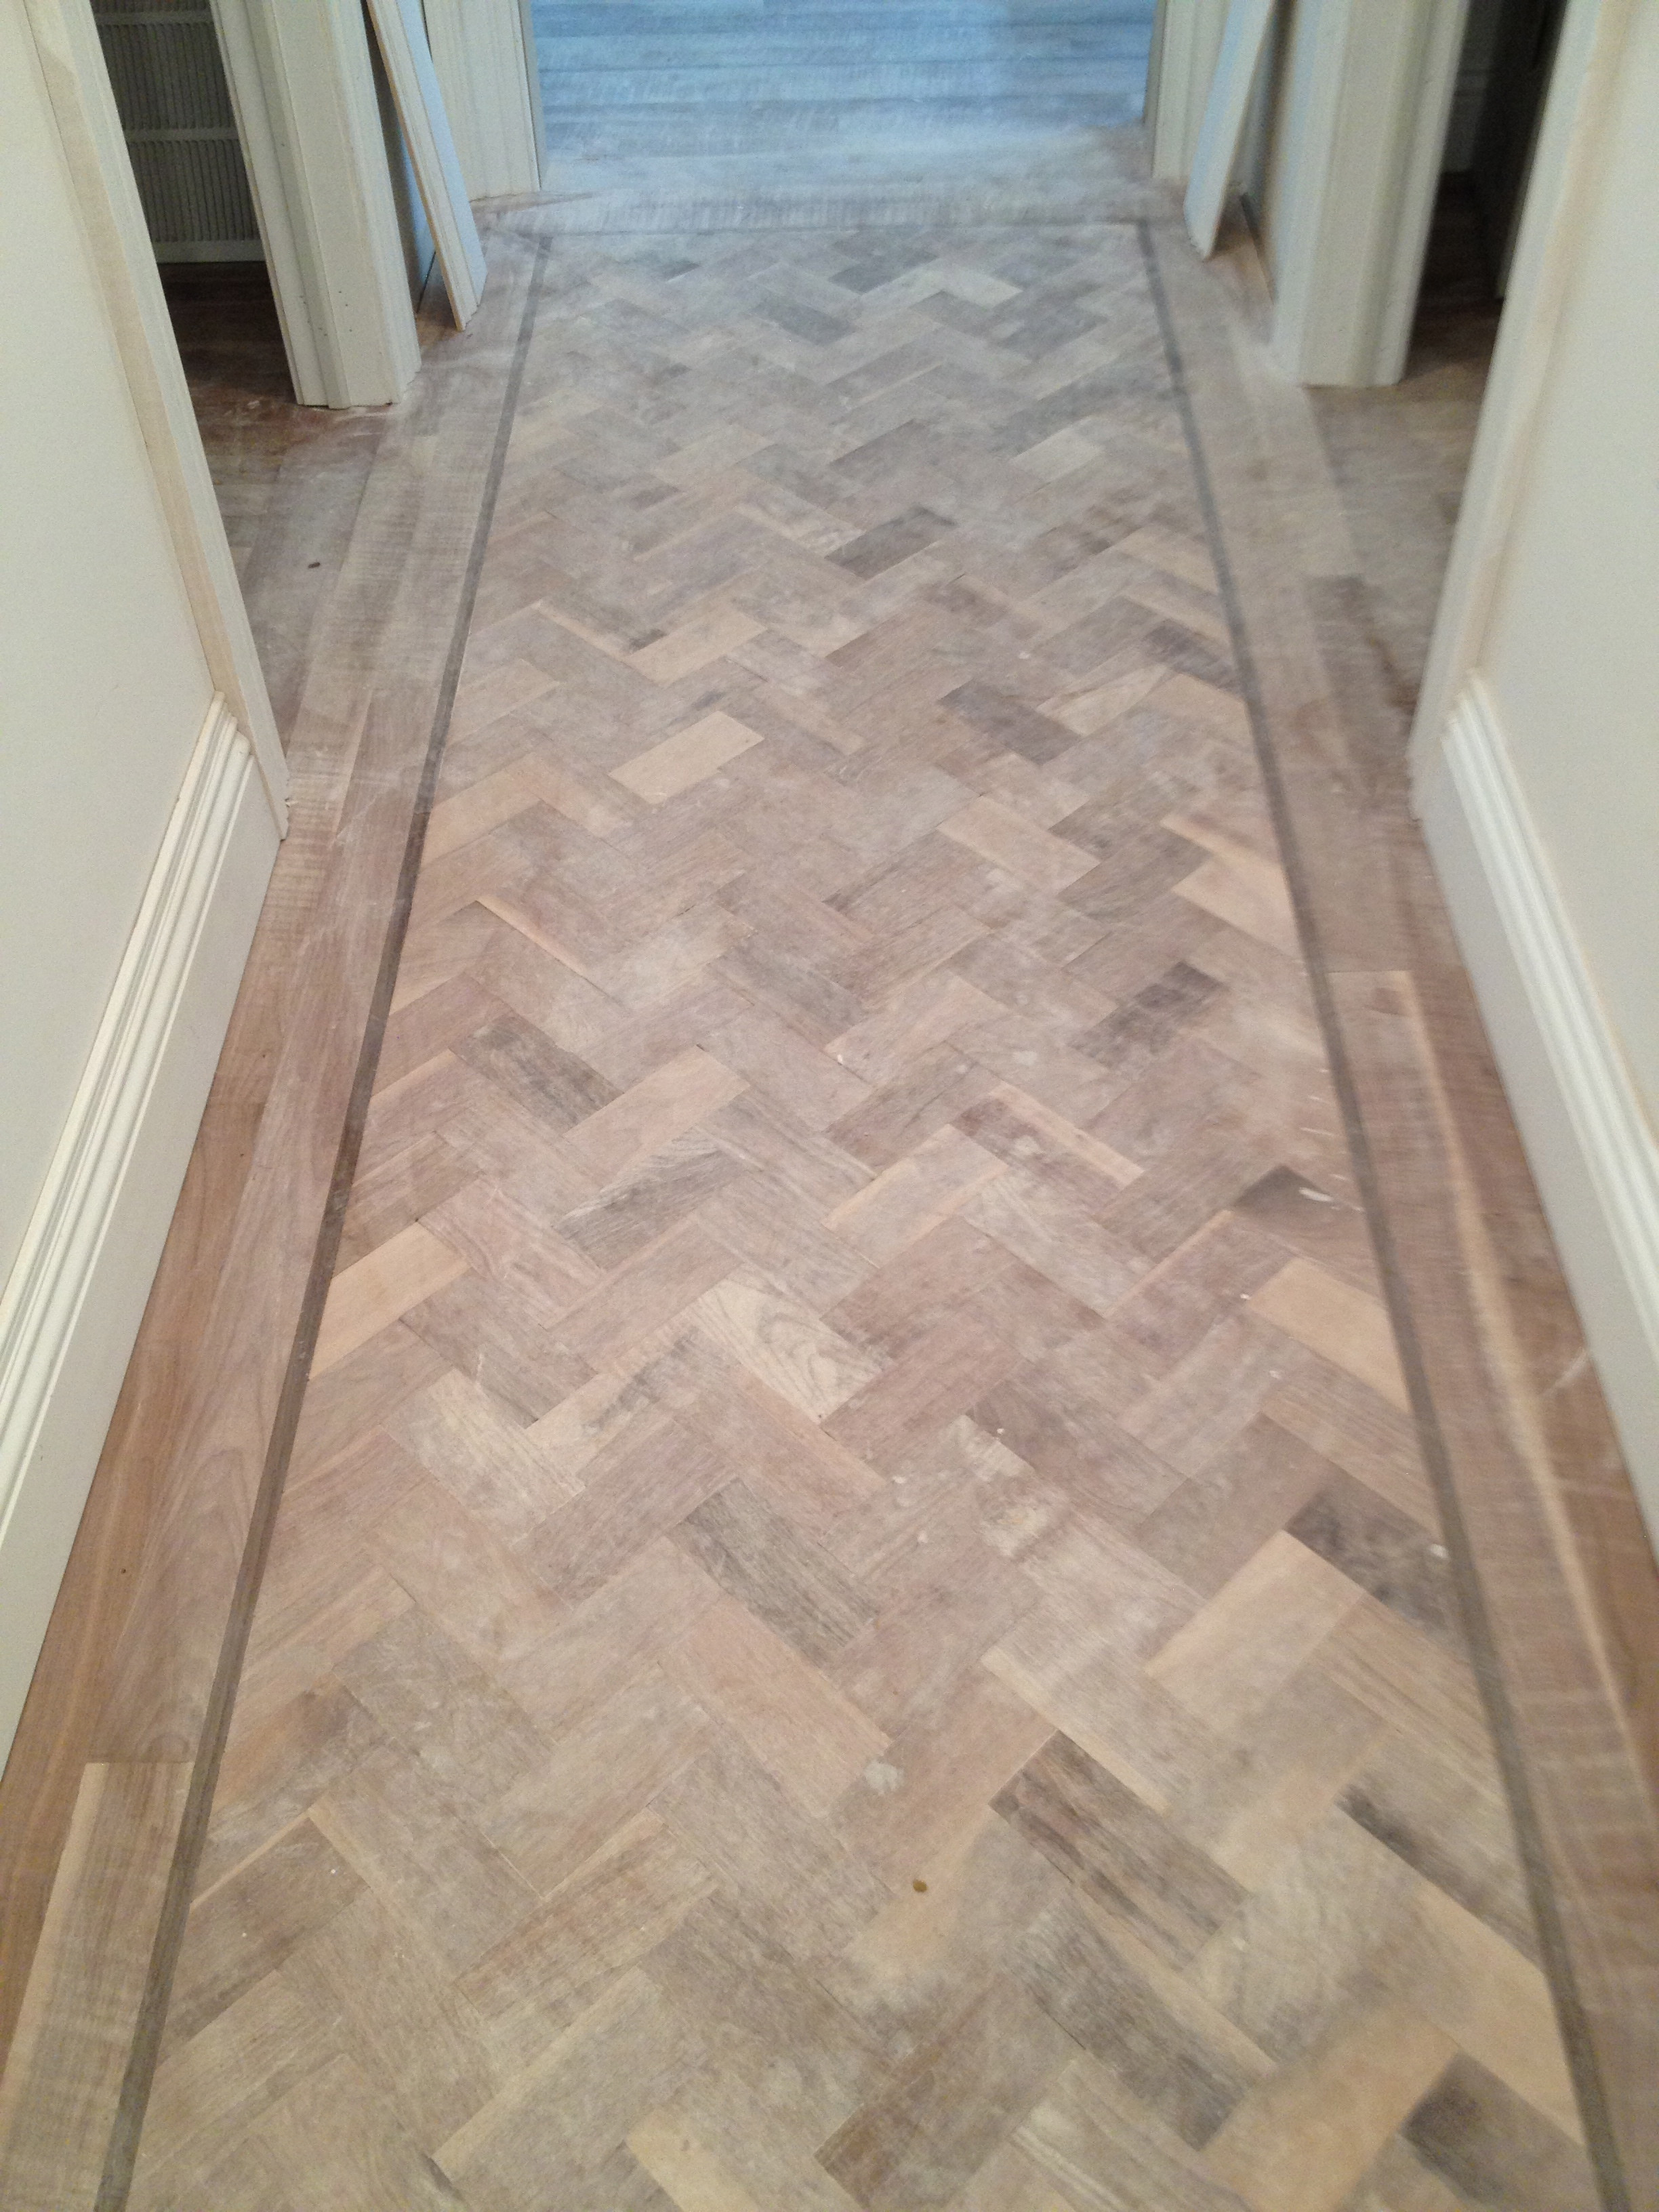 Hardwood Floor Refinishing Cherry Hill Nj Of Flooring Portfolio Gorsegner Brothers Throughout Img 0361